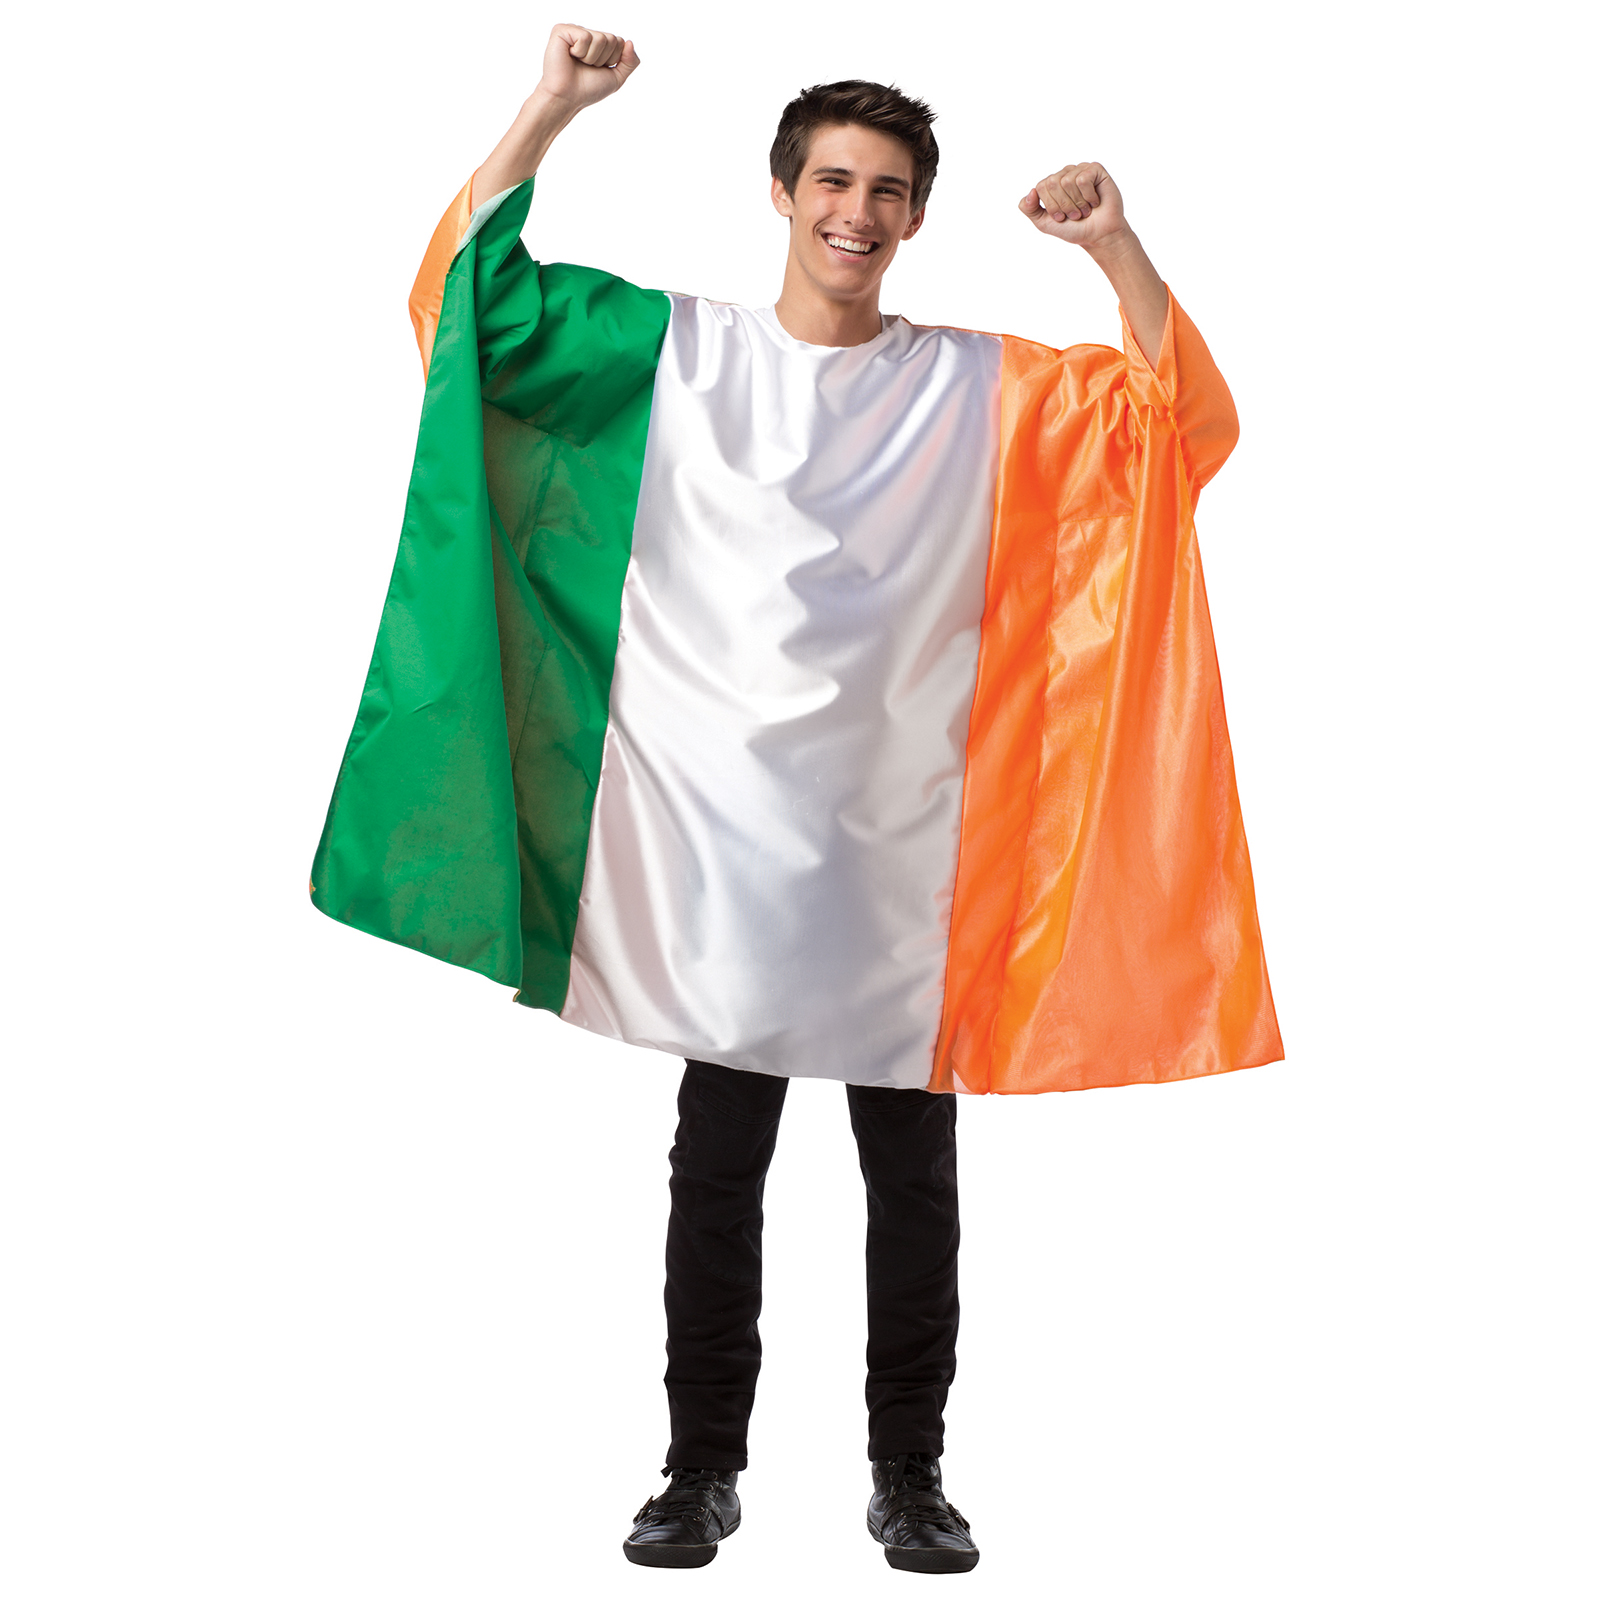 Flag Tunic-Ireland Size: One Size Fits Most